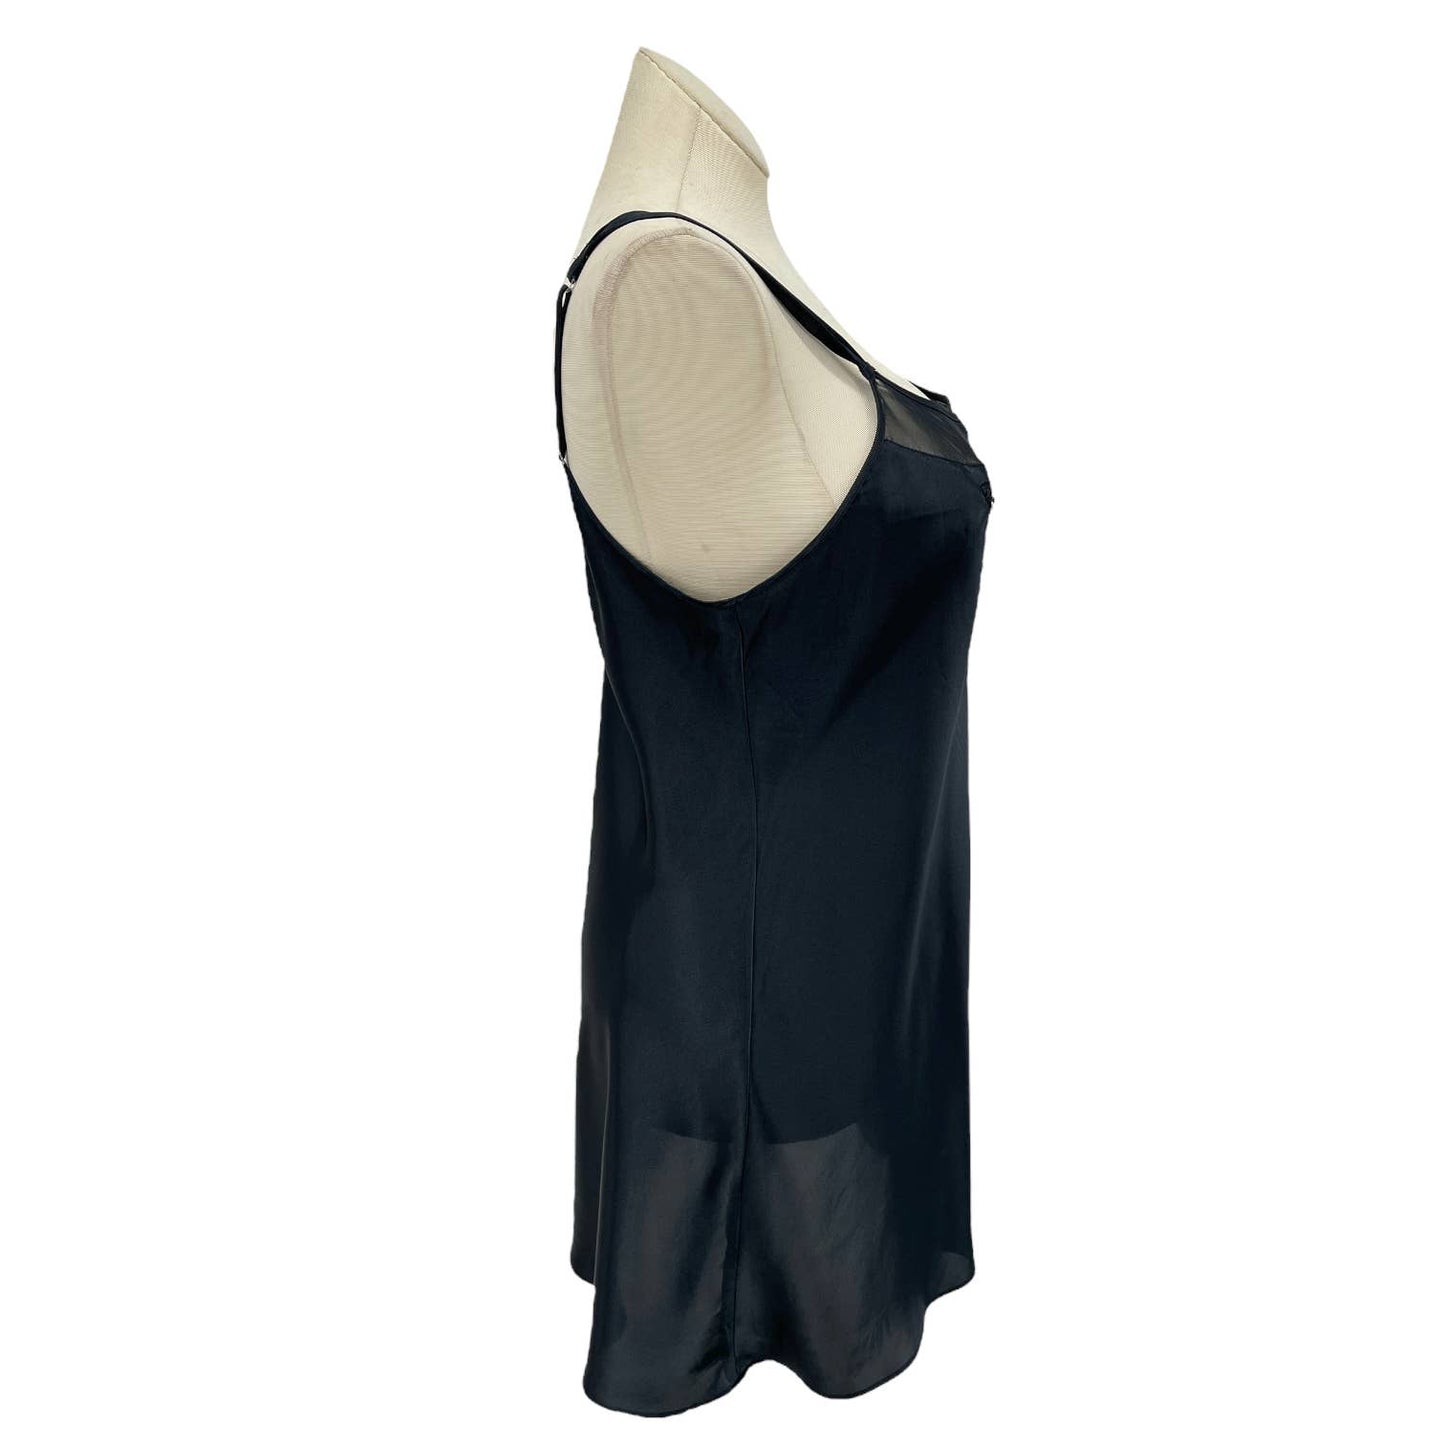 Vintage 90s Black Satin Nightgown Slip Dress Sheer Yoke Morgan Taylor Intimates